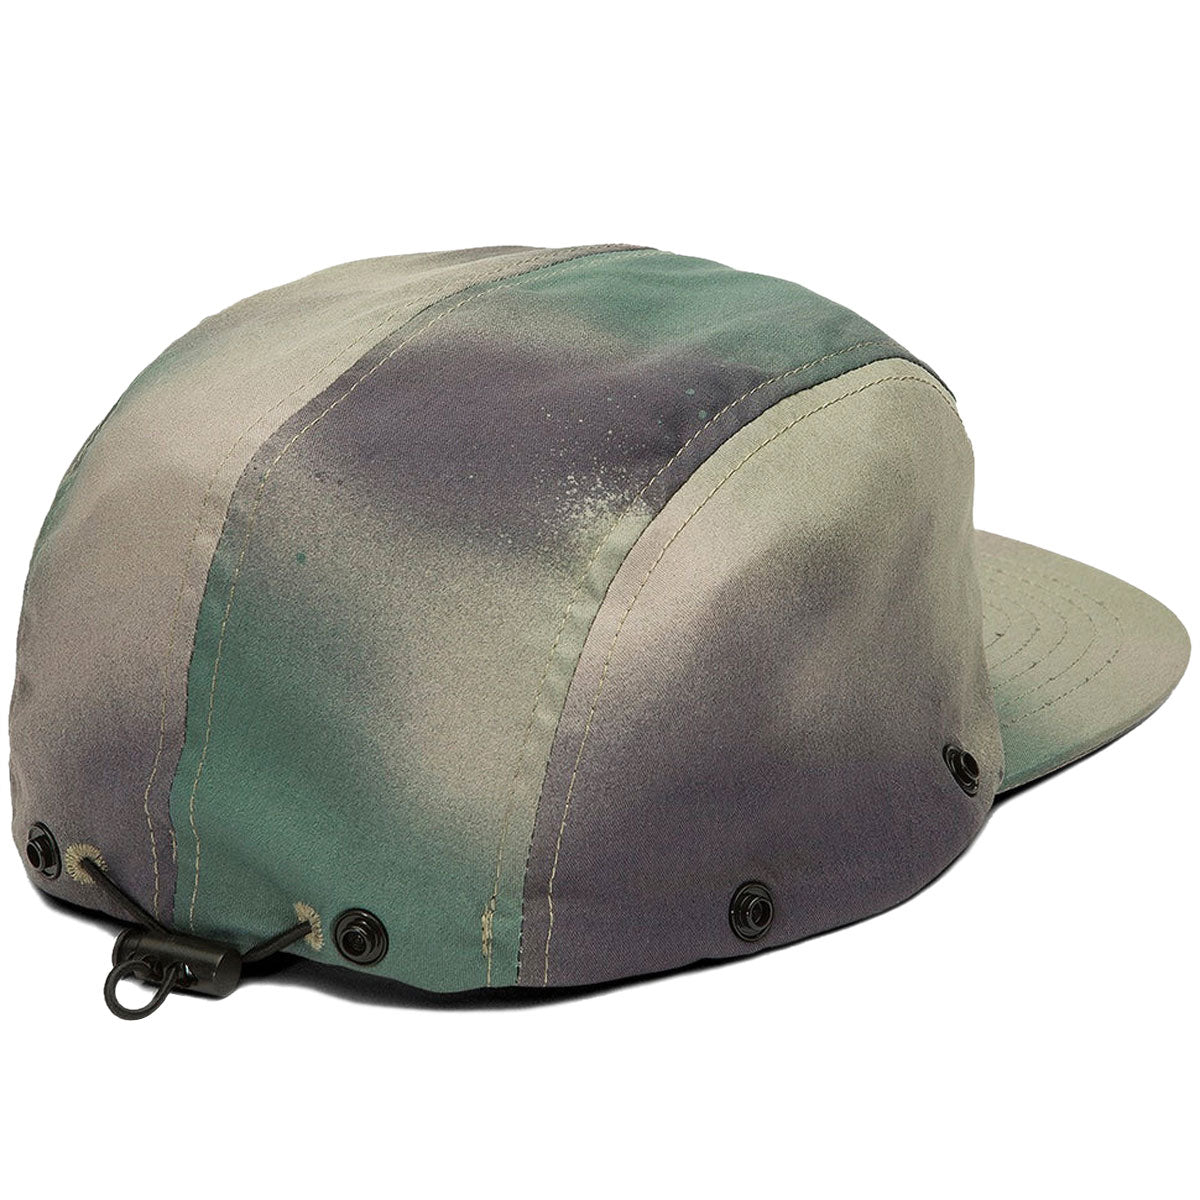 Volcom Stone Trip Flap Hat - Camouflage image 5